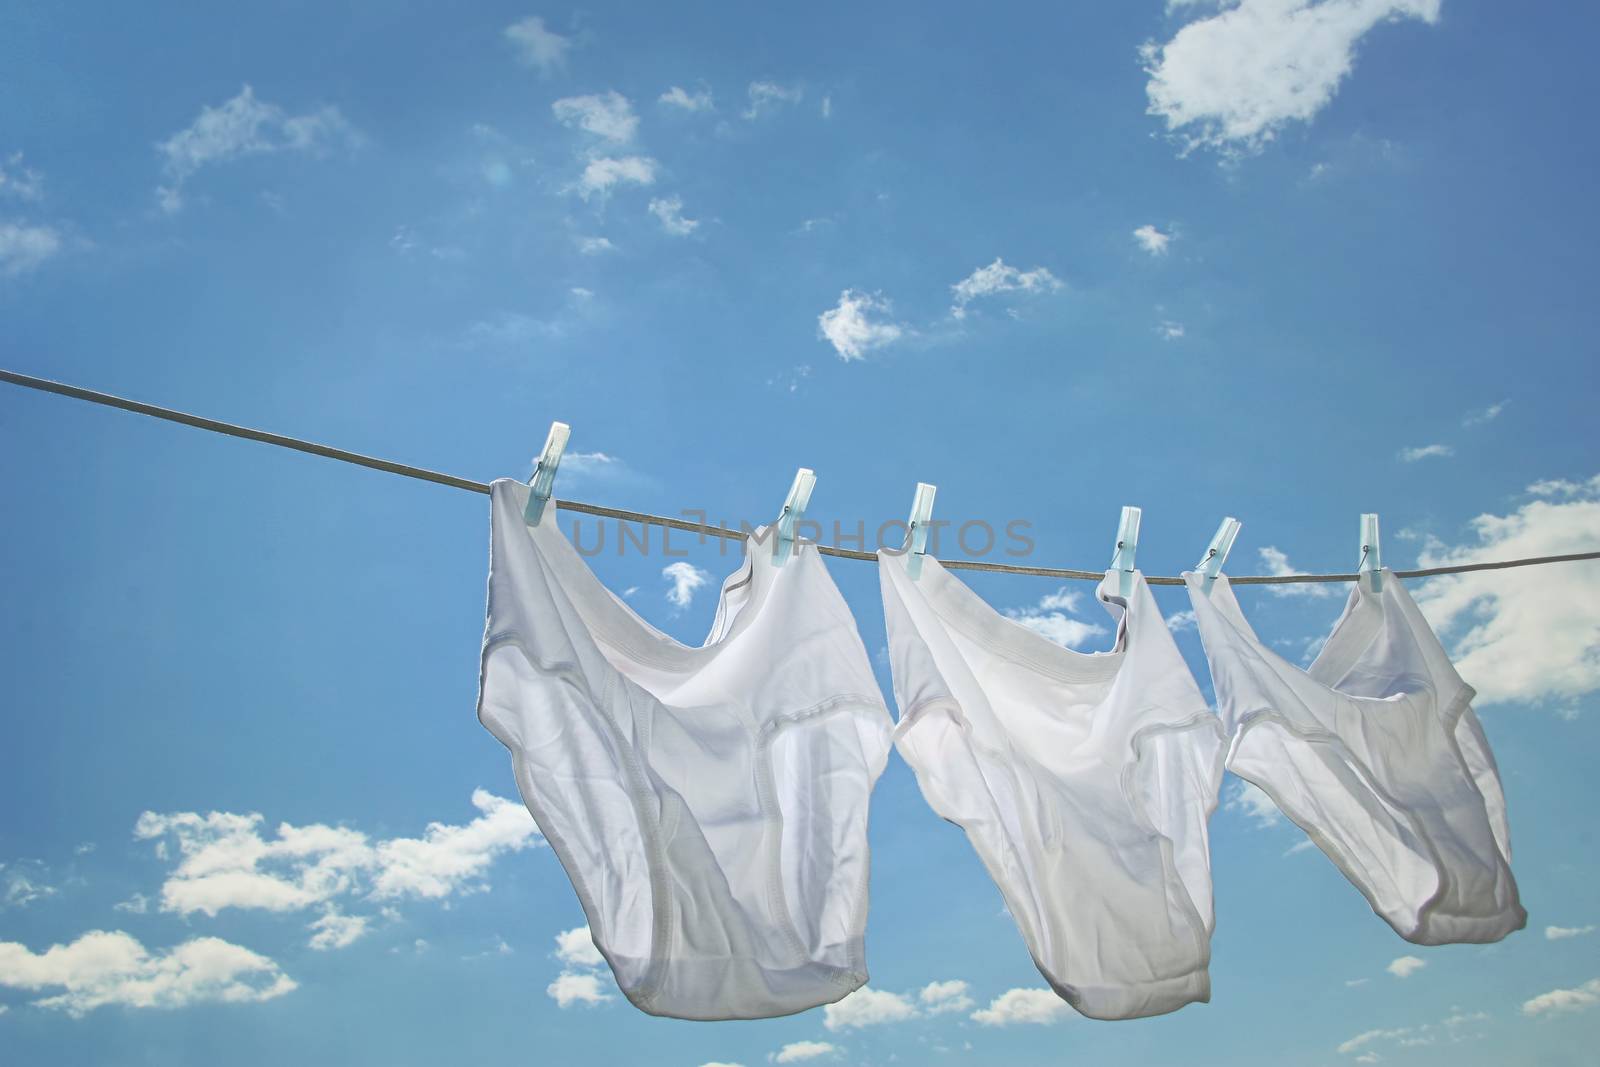 Men's underwear hanging on clothesline against blue sky